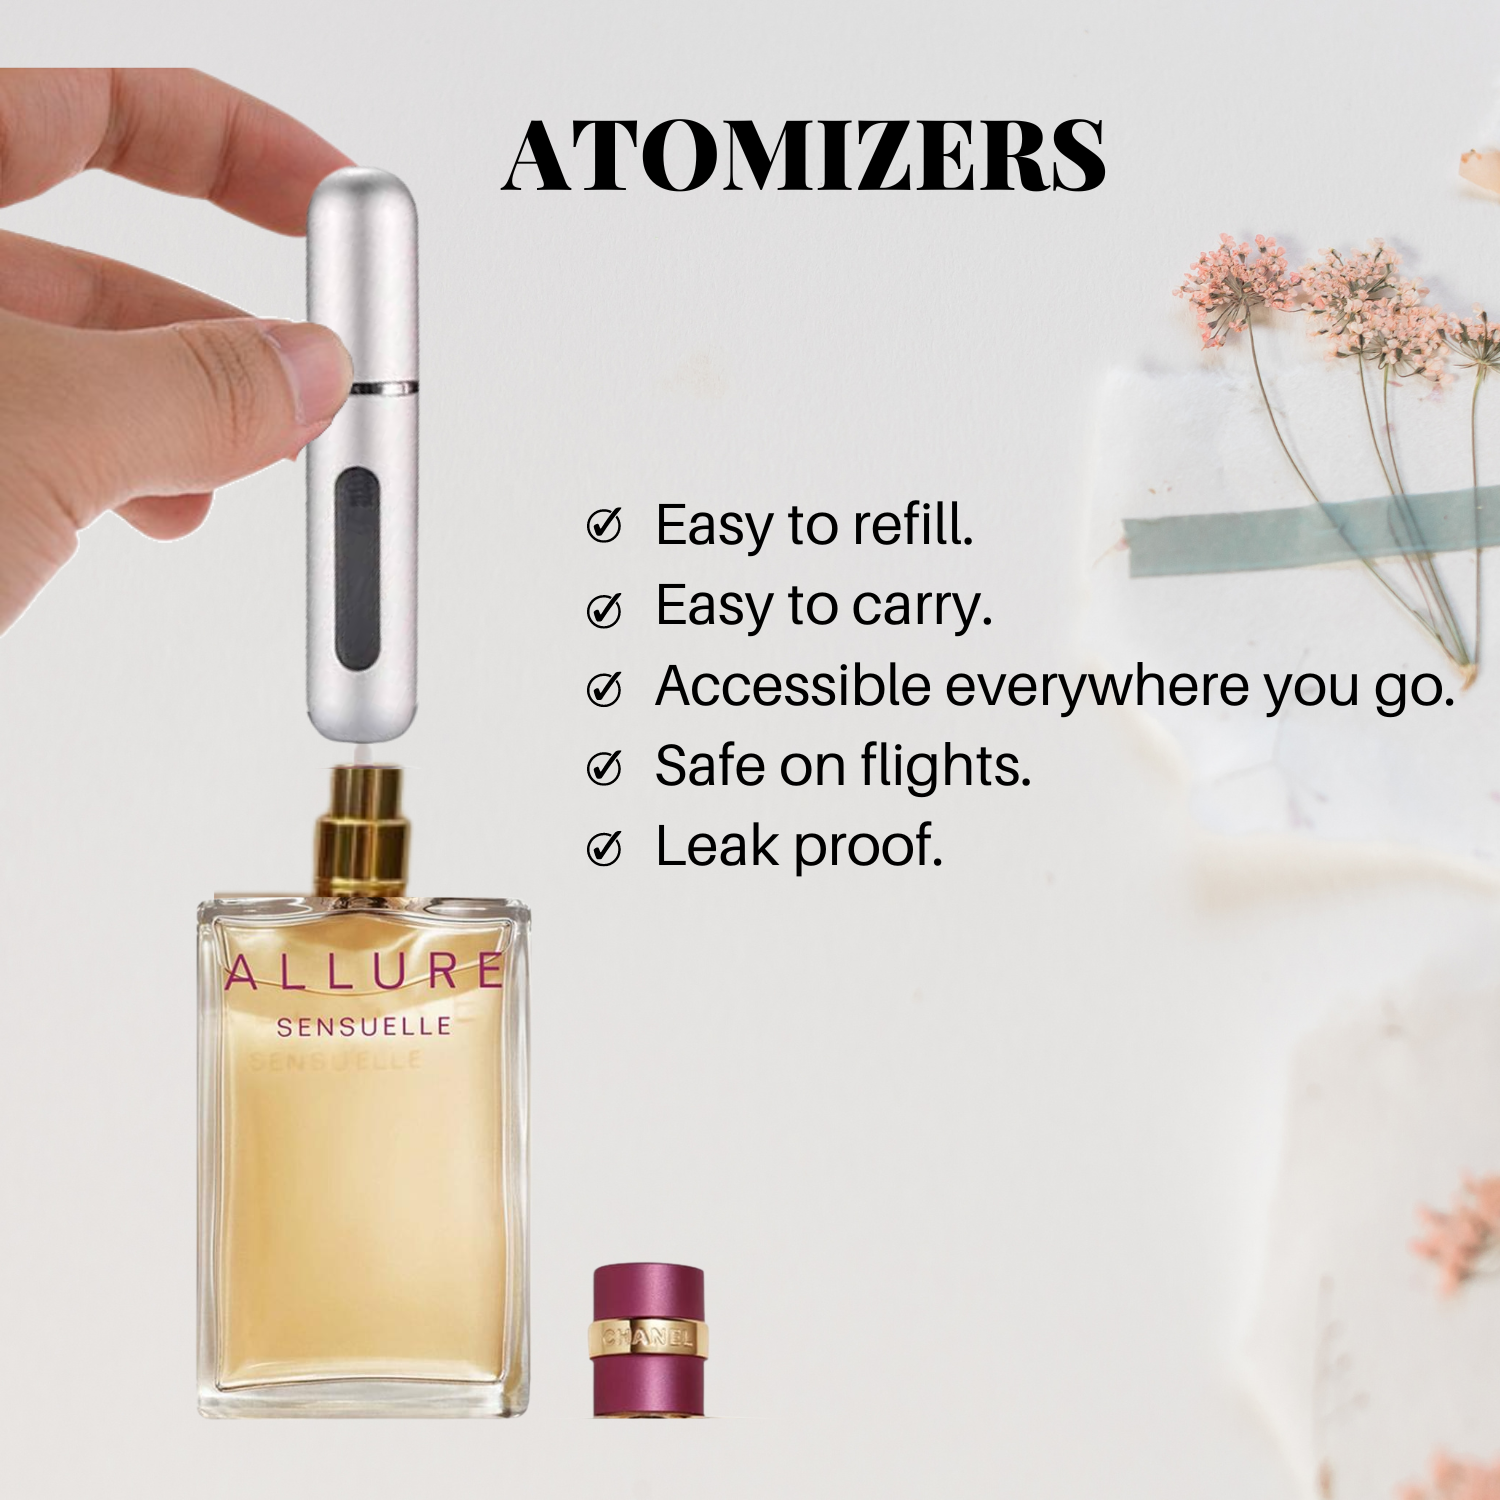 Chanel Allure Sensuelle EDT Spray 100ml Perfume Gift Set by Trioni